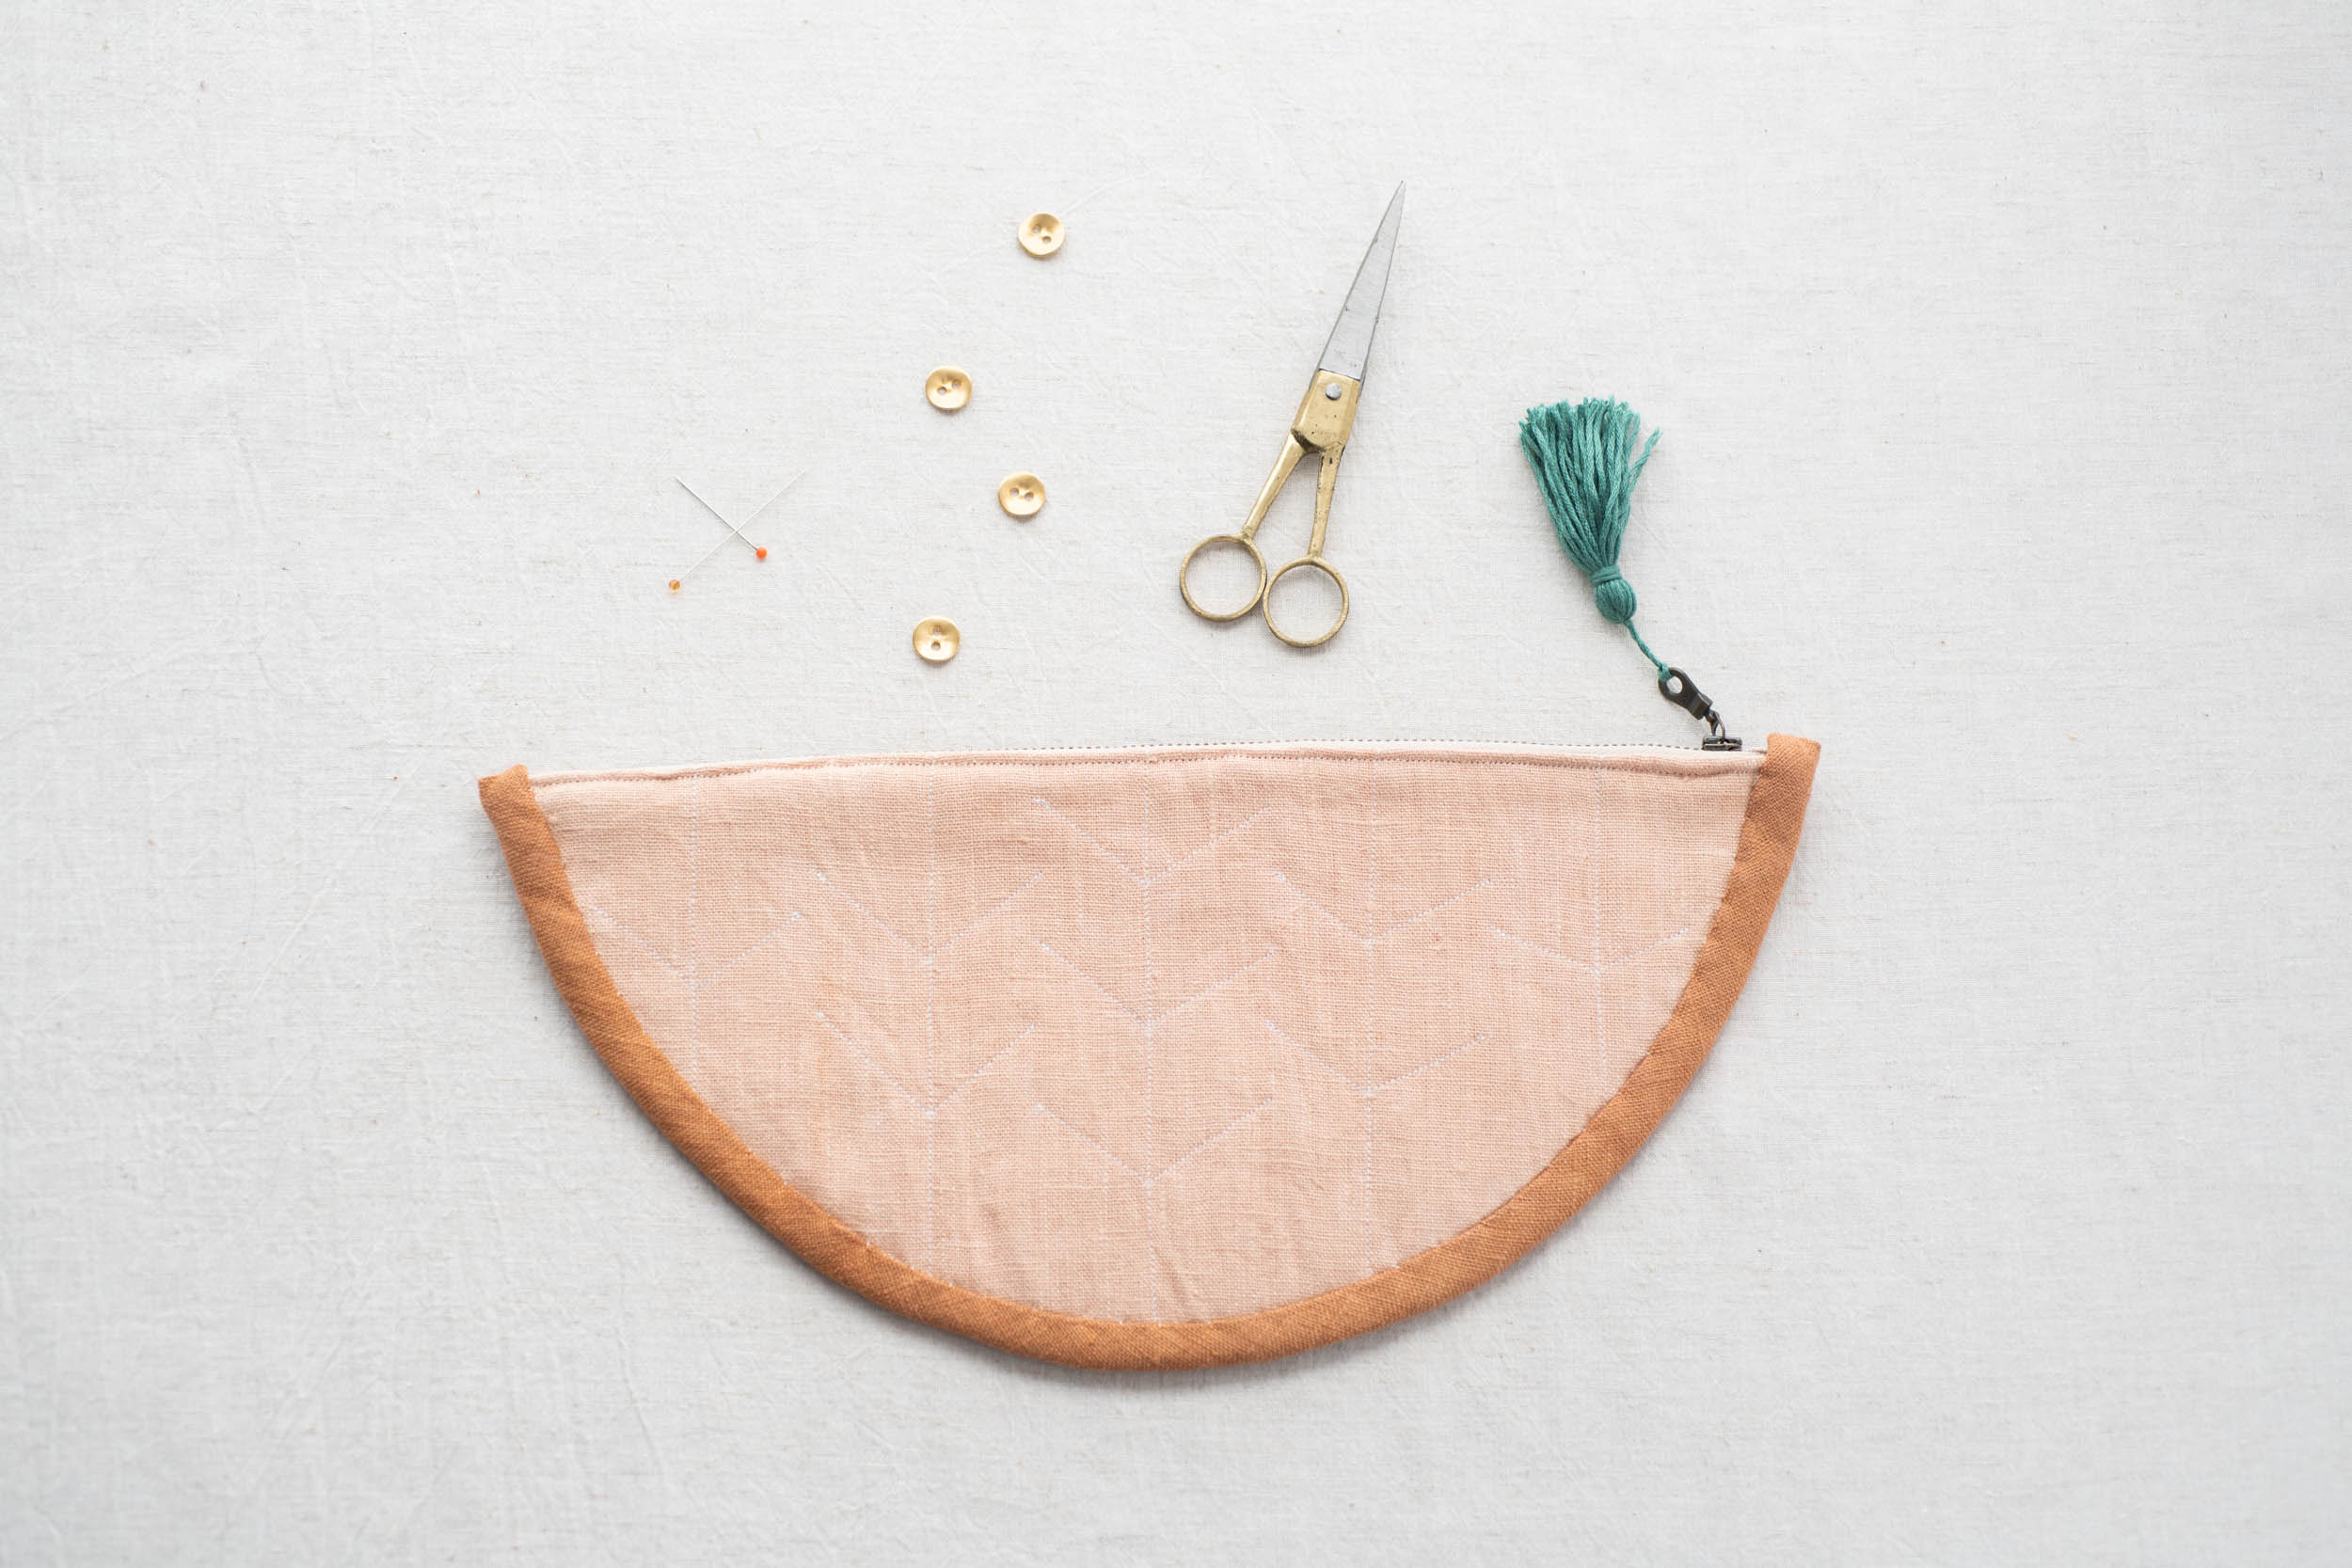 Sewn pouch by Jess Lucas